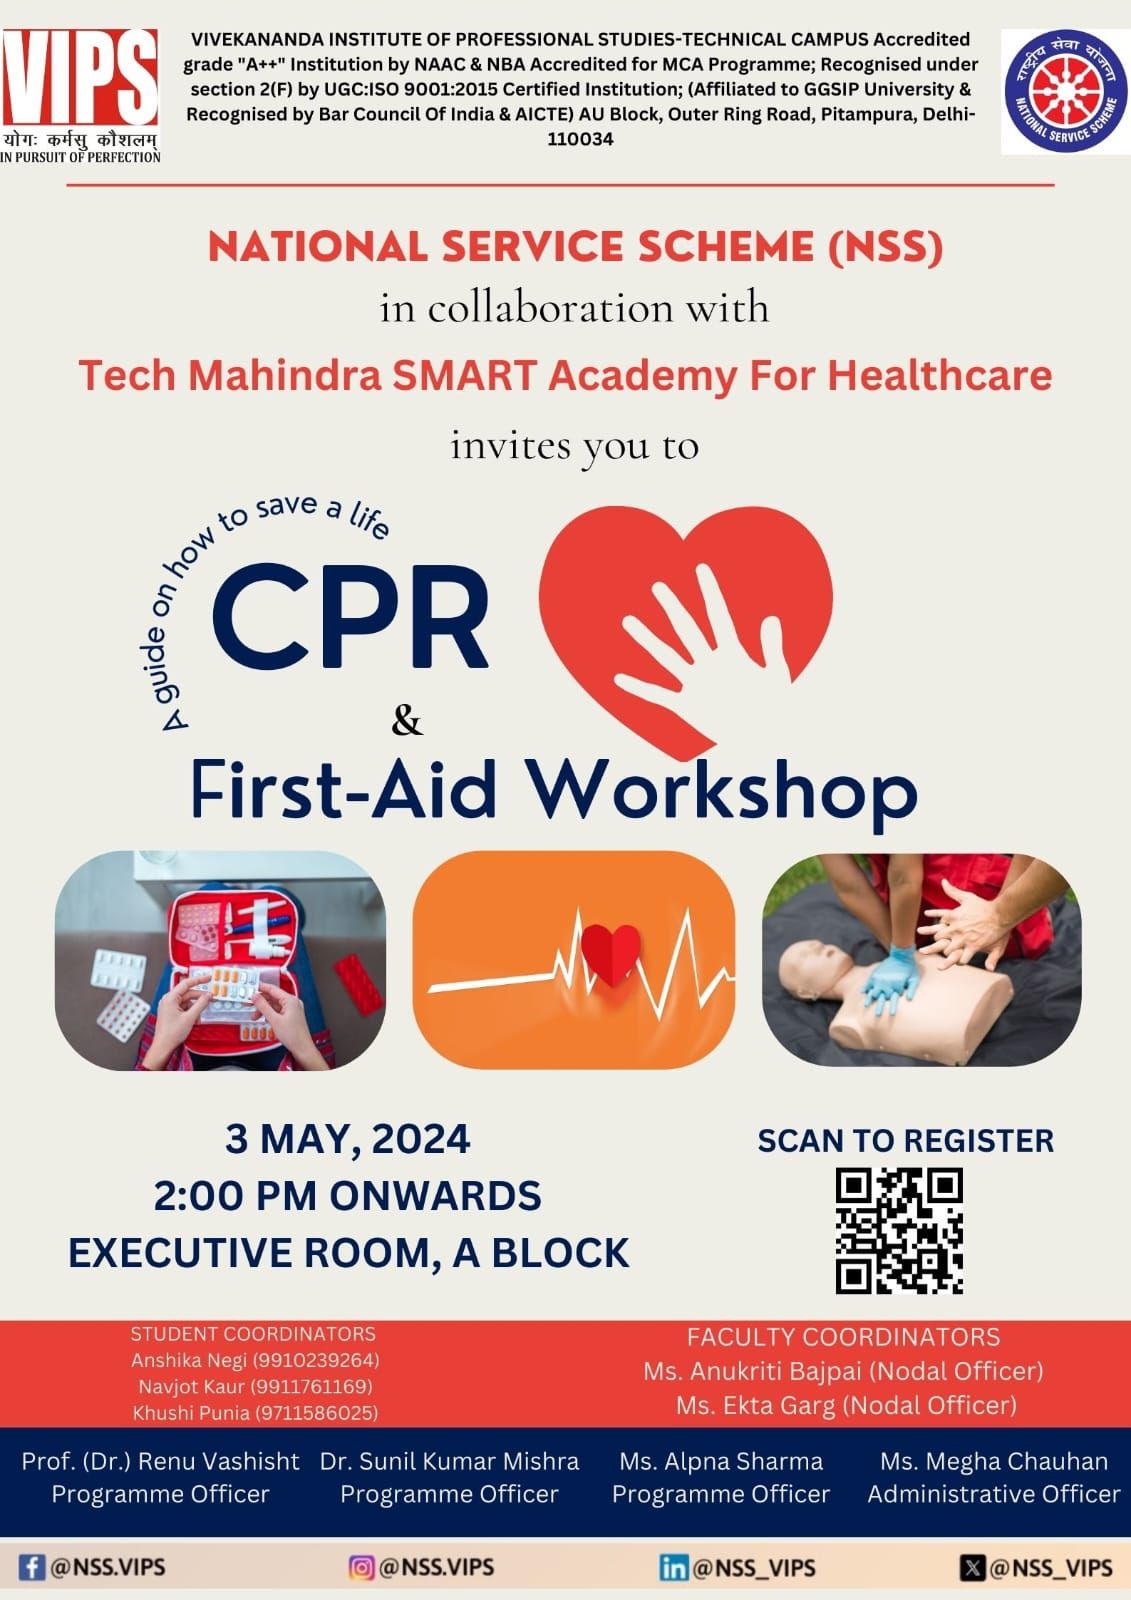 CPR & First-Aid Workshop